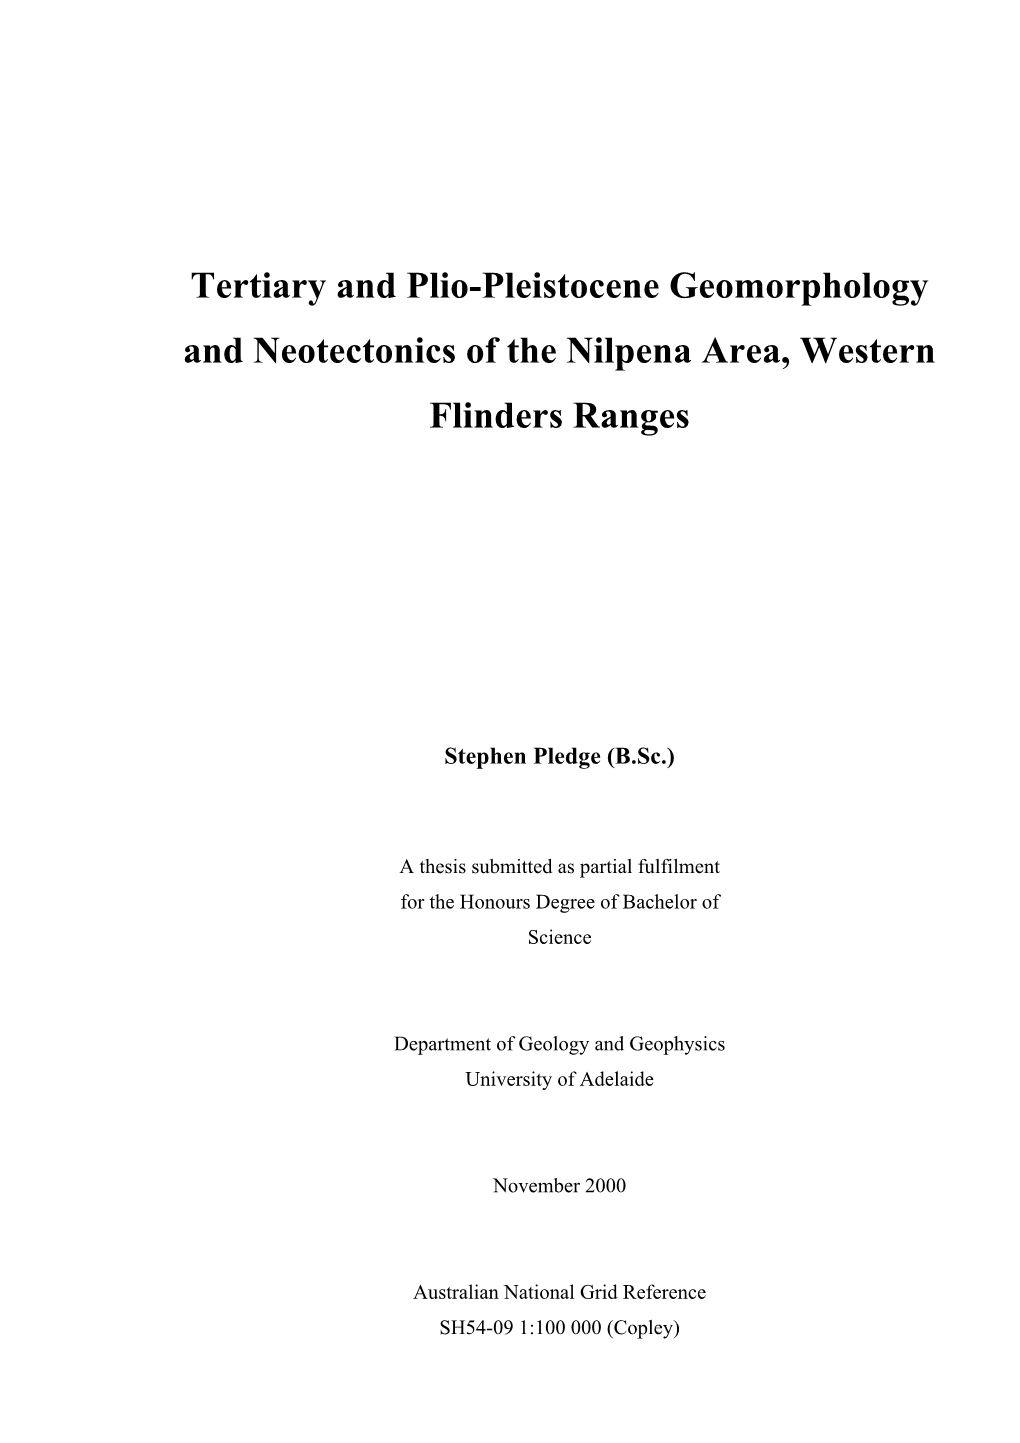 Tertiary and Plio-Pleistocene Geomorphology and Neotectonics of the Nilpena Area, Western Flinders Ranges